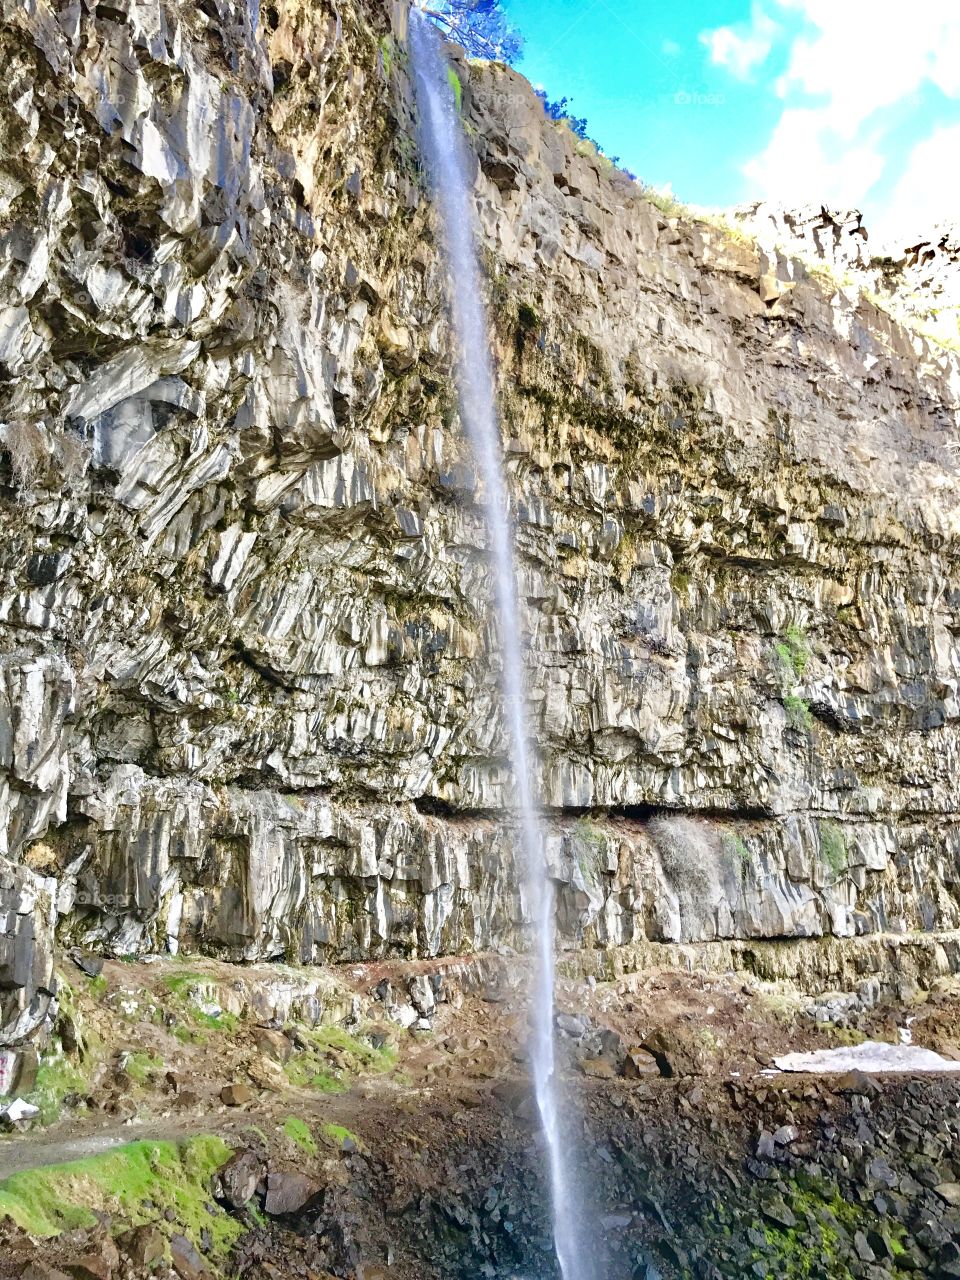 Small rock waterfall